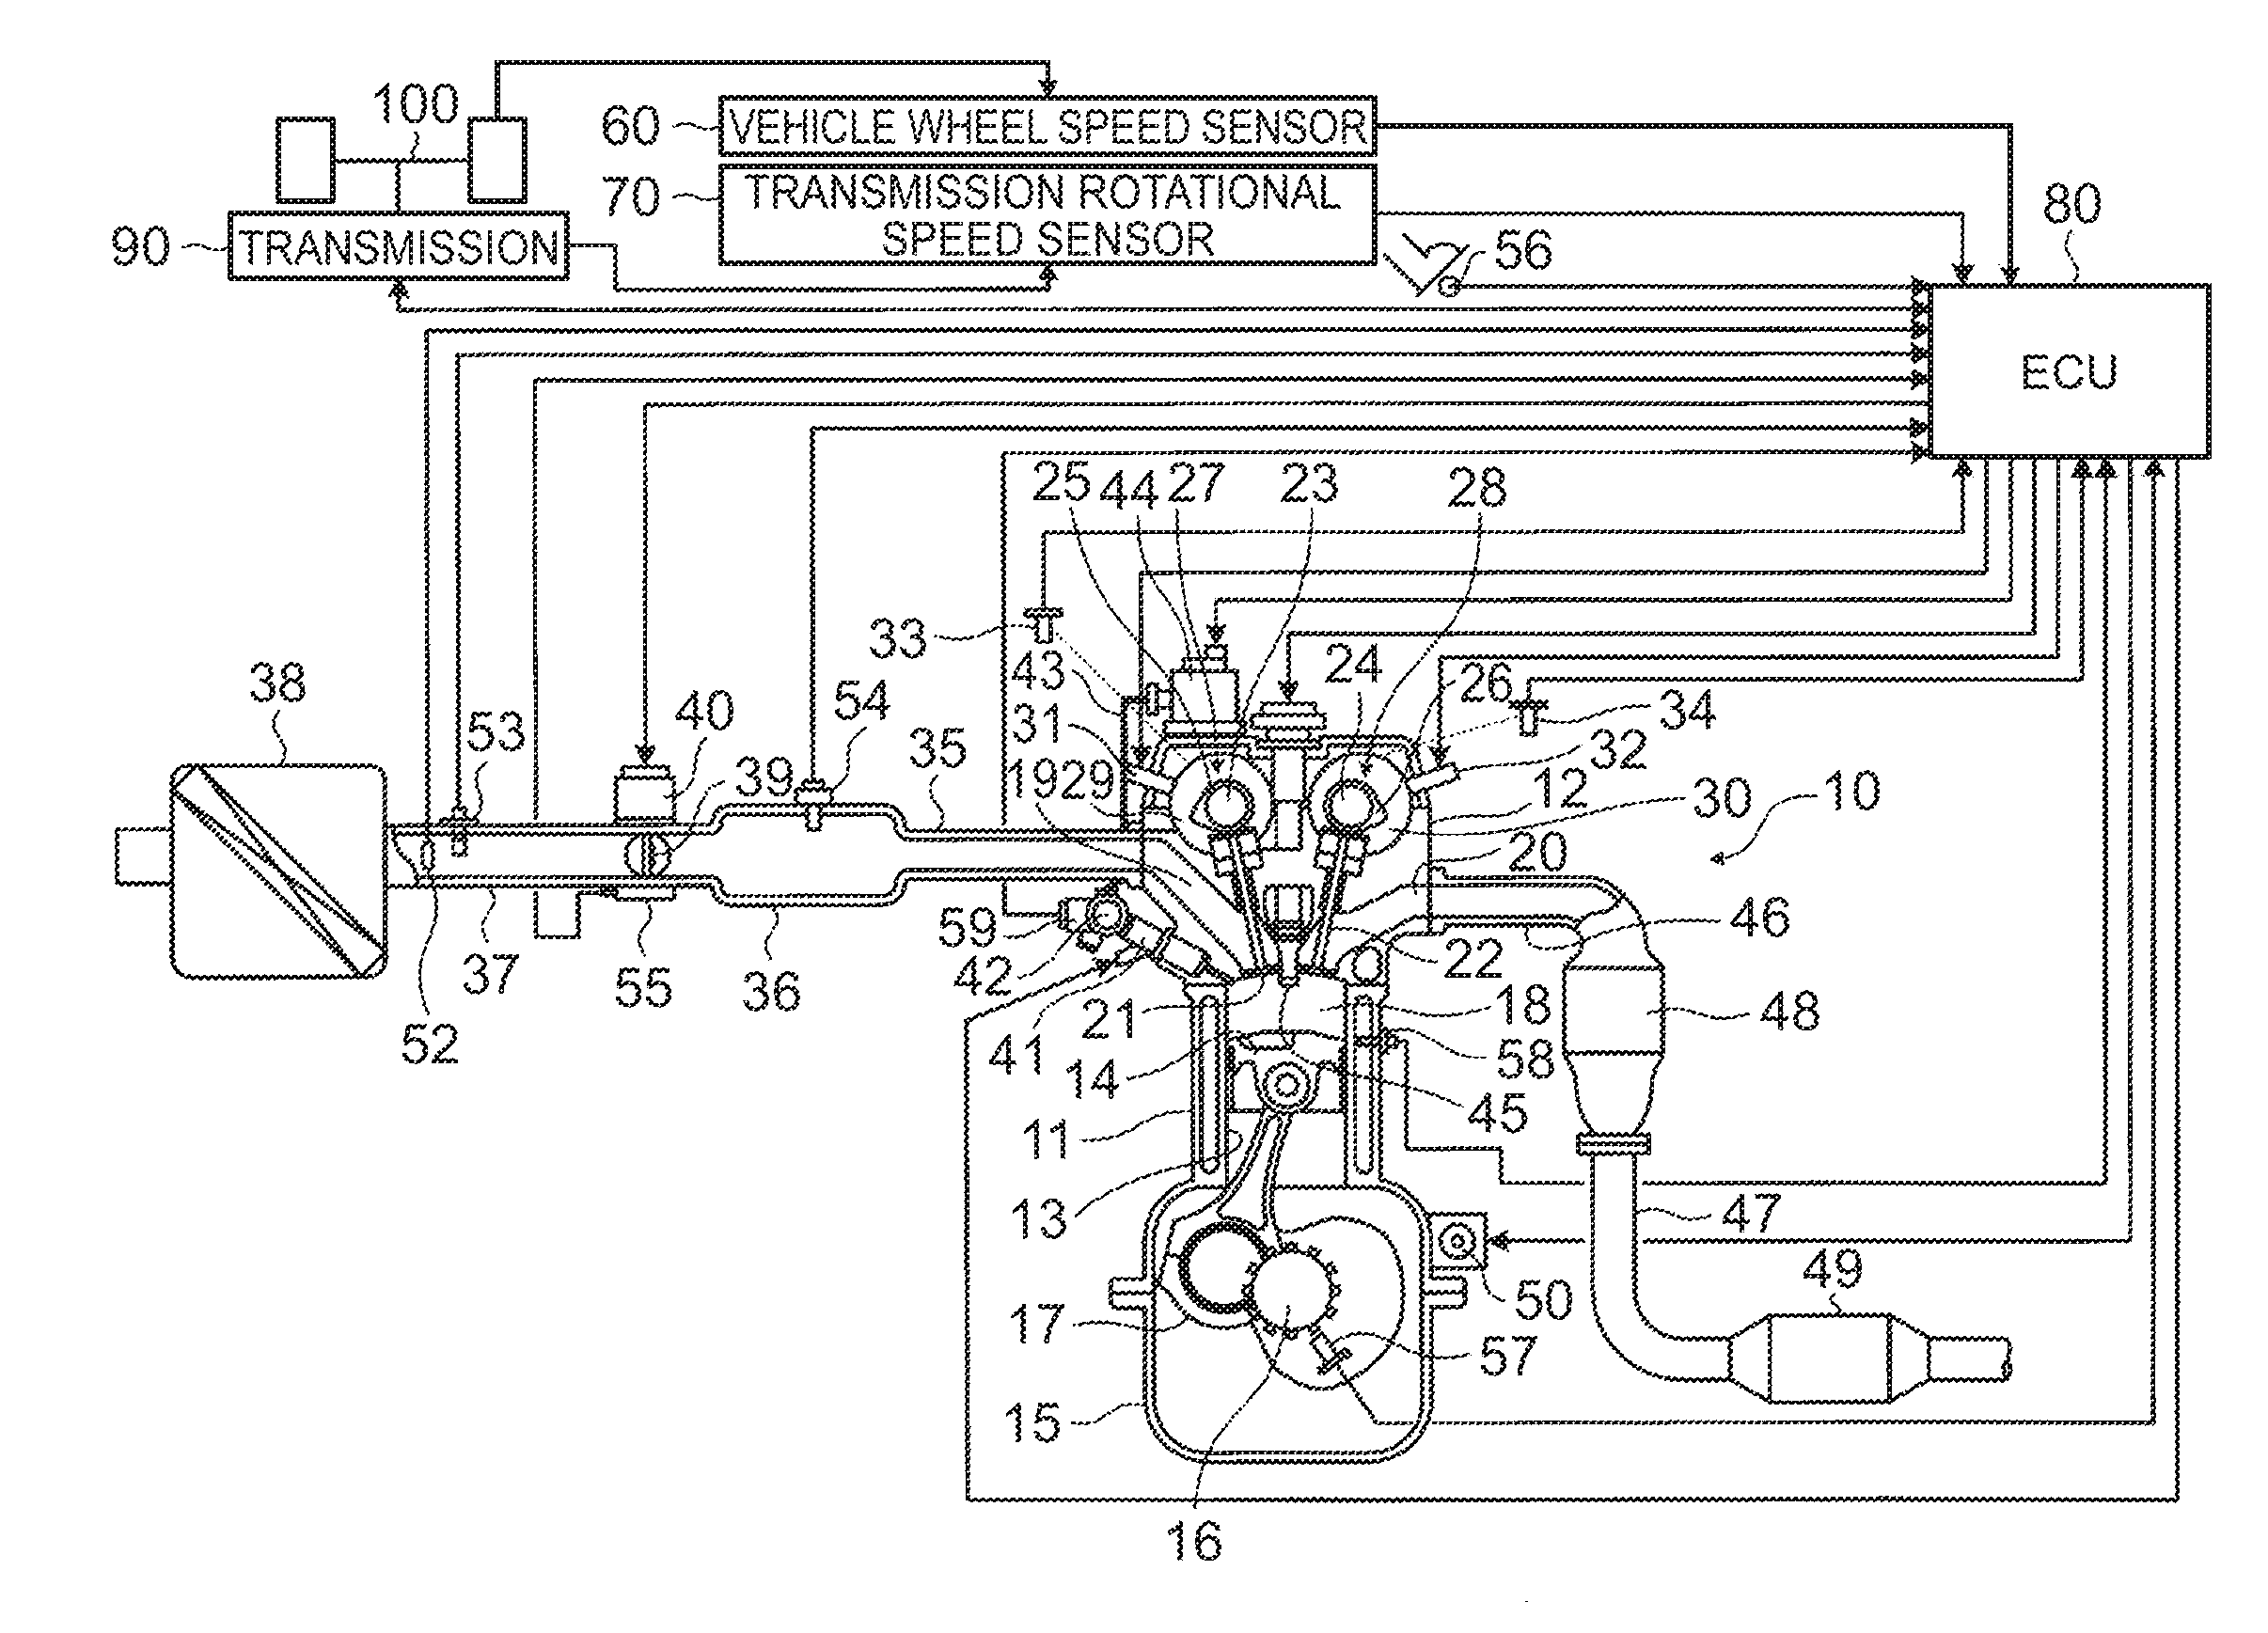 Engine starting system